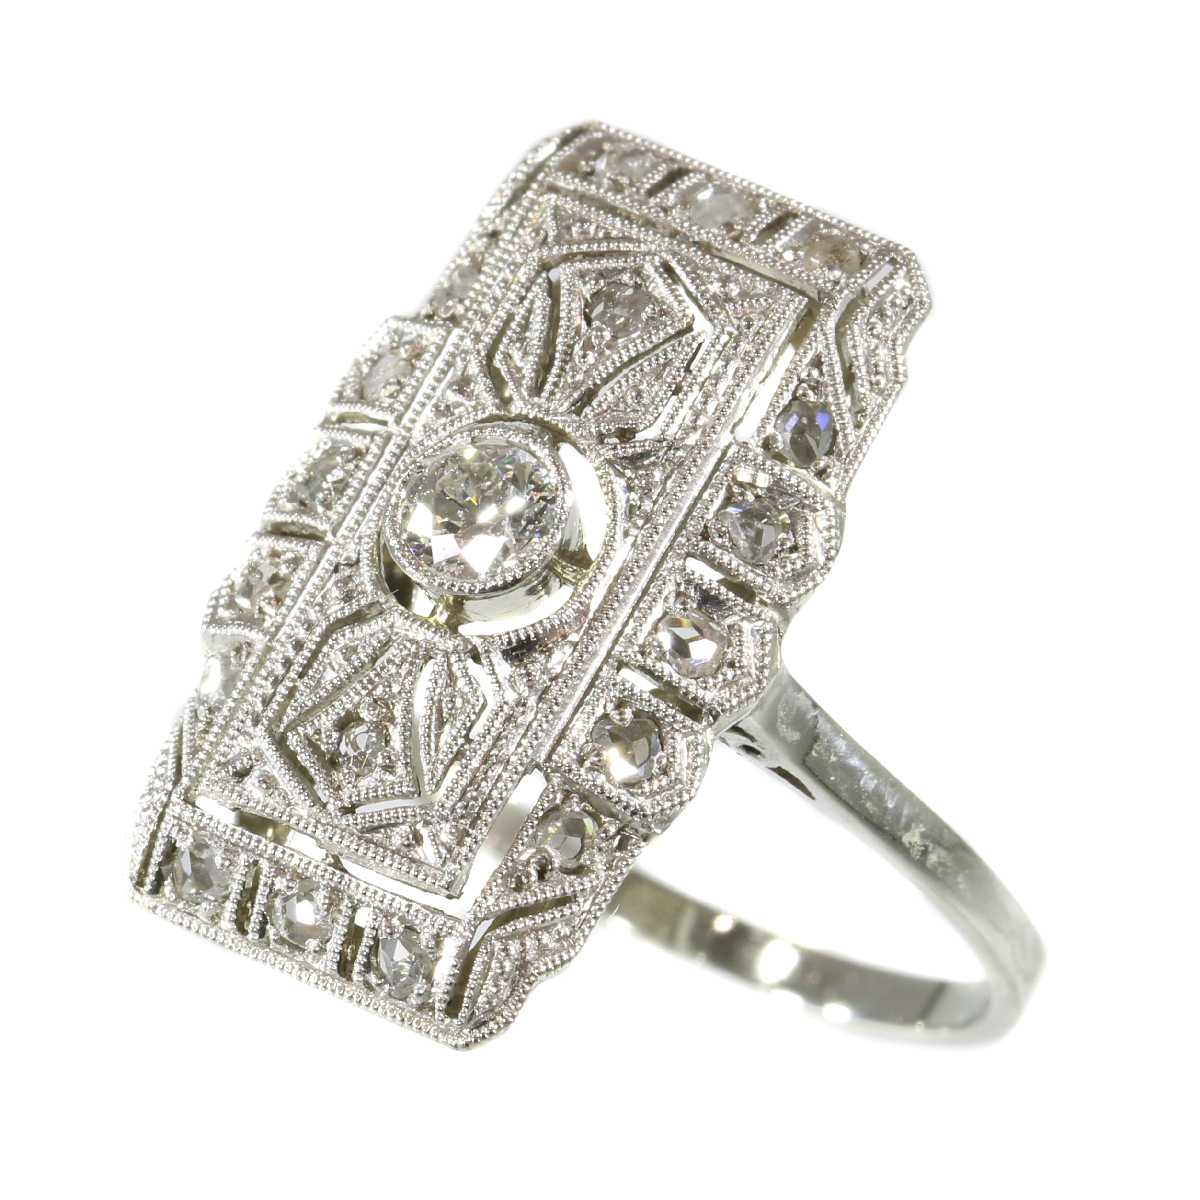 Classy Edwardian Art Deco diamond engagement ring